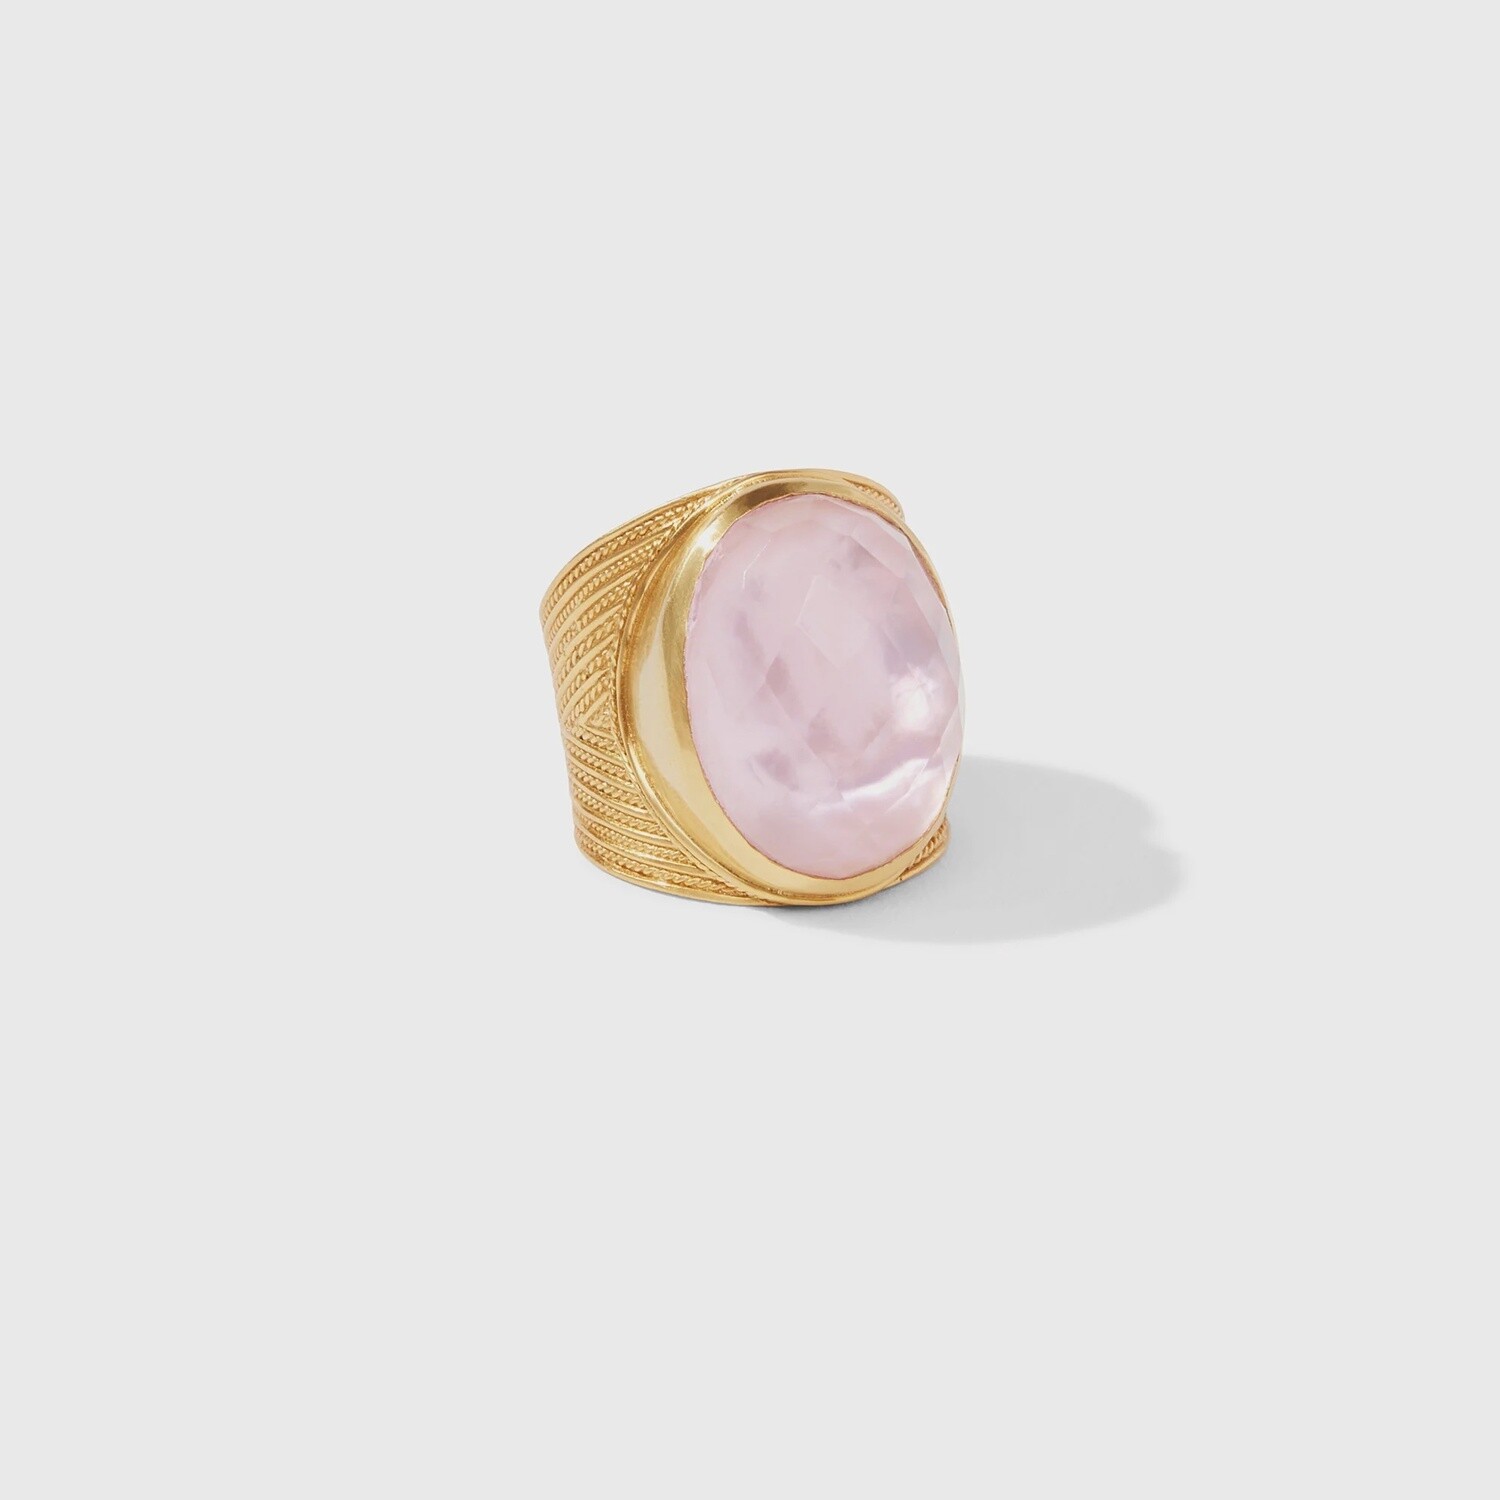 Julie Vos Verona Statement Ring, Size: 8, color: Iridescent Rose